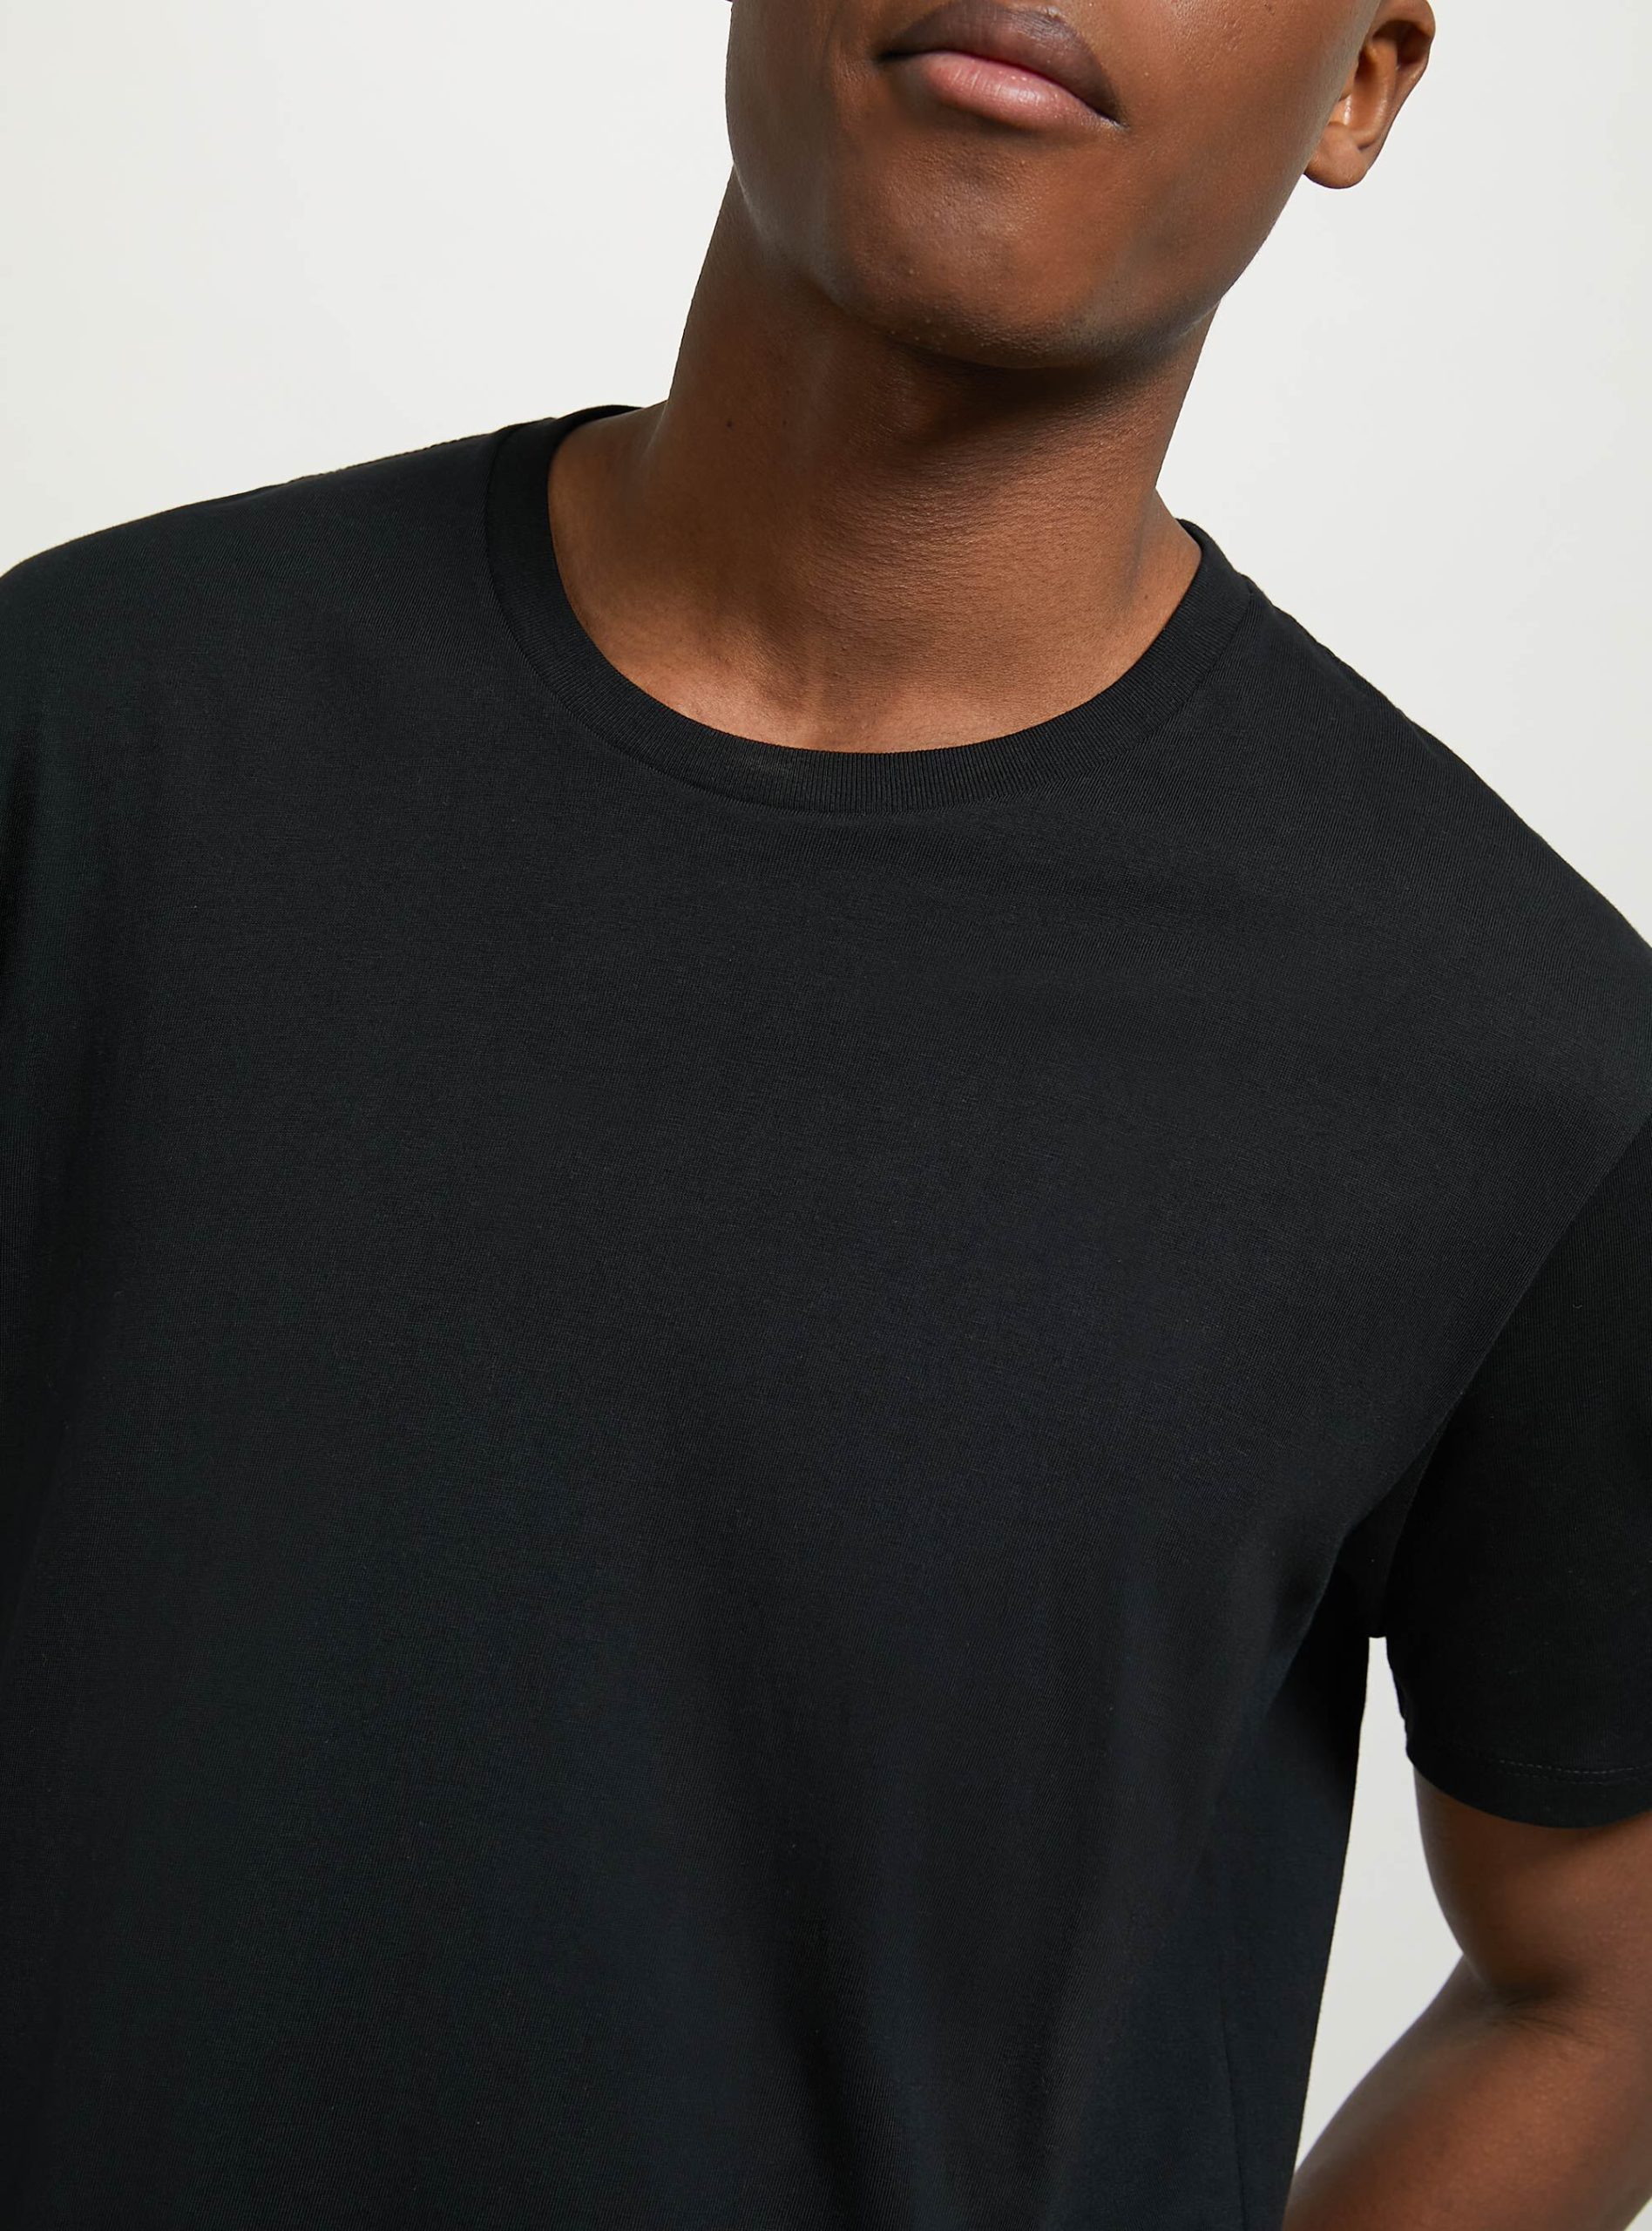 Alcott Material Bk1 Black T-Shirts Männer Cotton Crew-Neck T-Shirt – 2